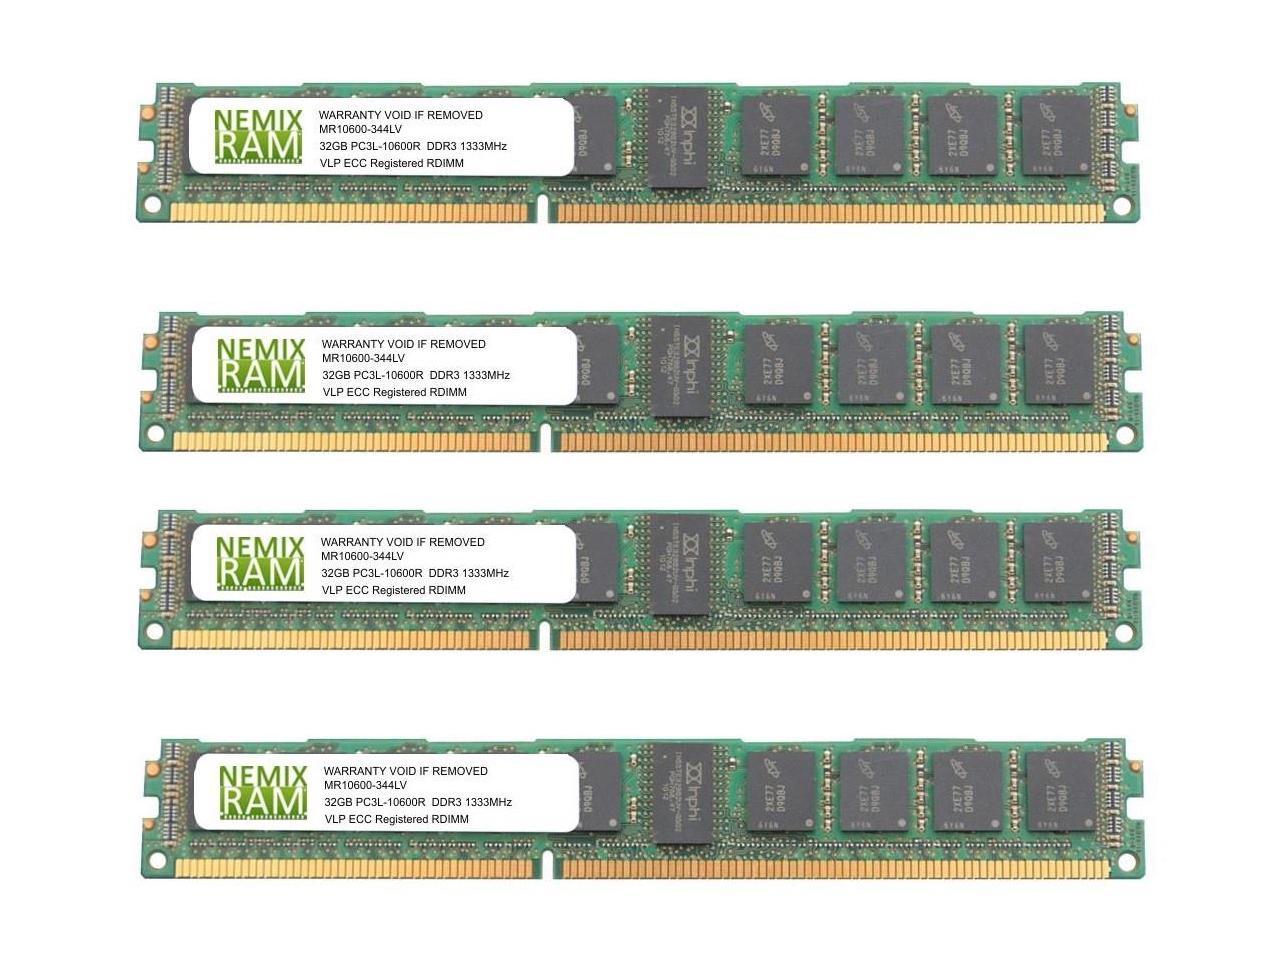 NEMIX RAM 128GB 4x32GB DDR3-1333 PC3-10600 4Rx4 1.35V VLP ECC